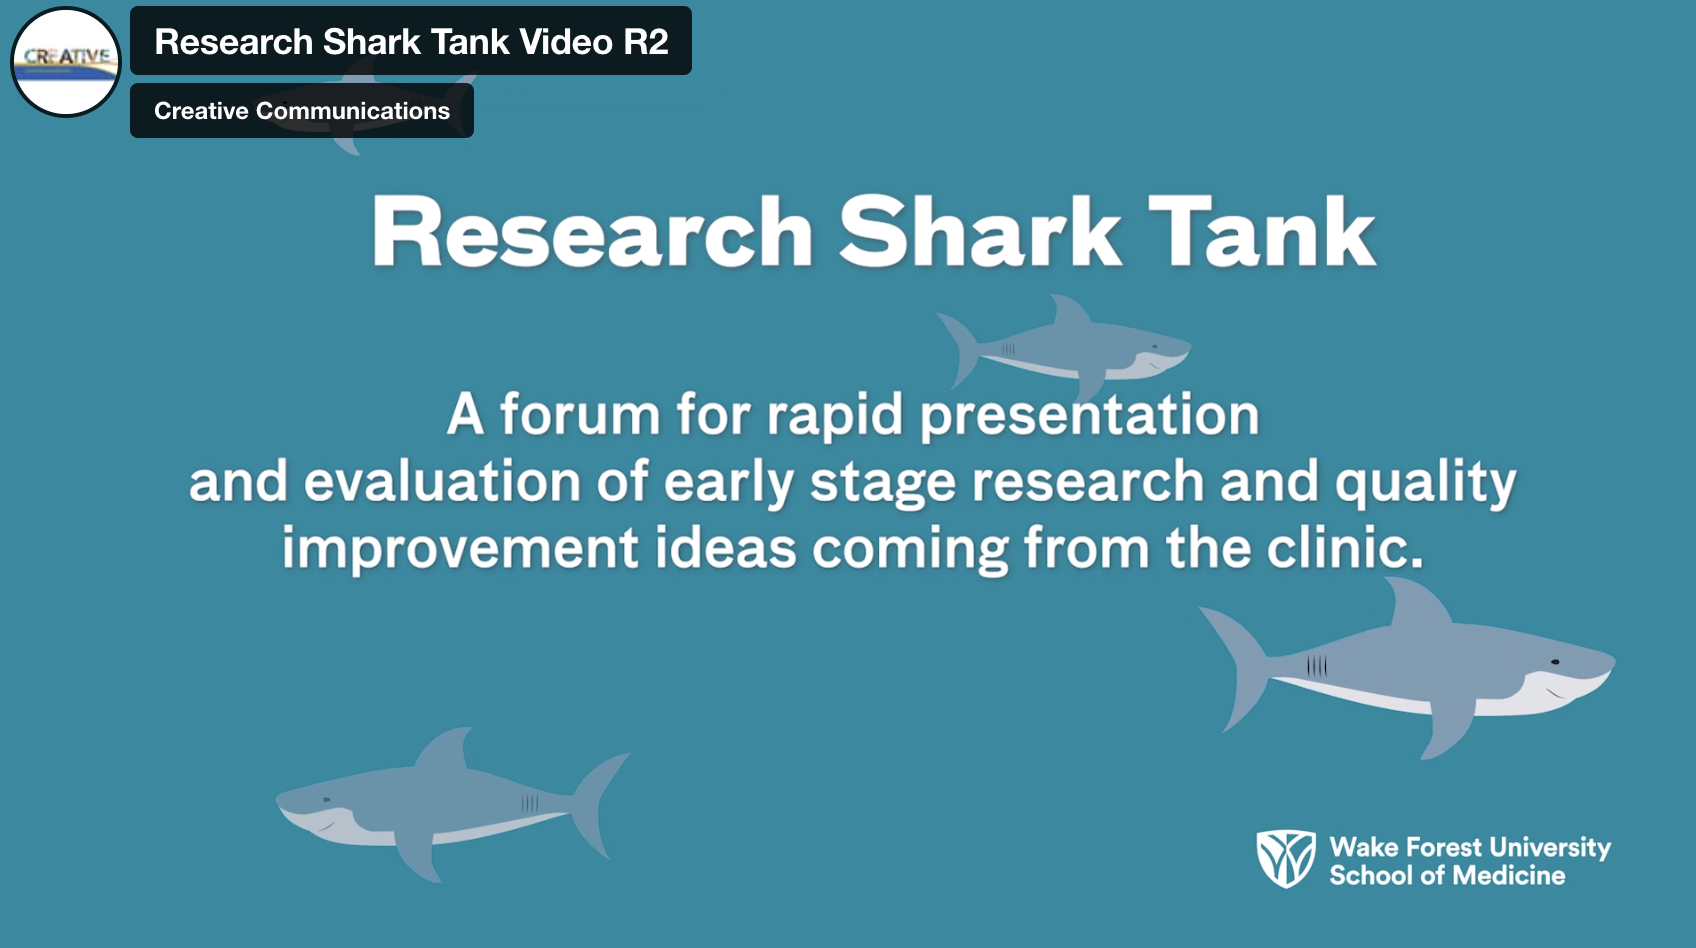 Research Shark Tank Video